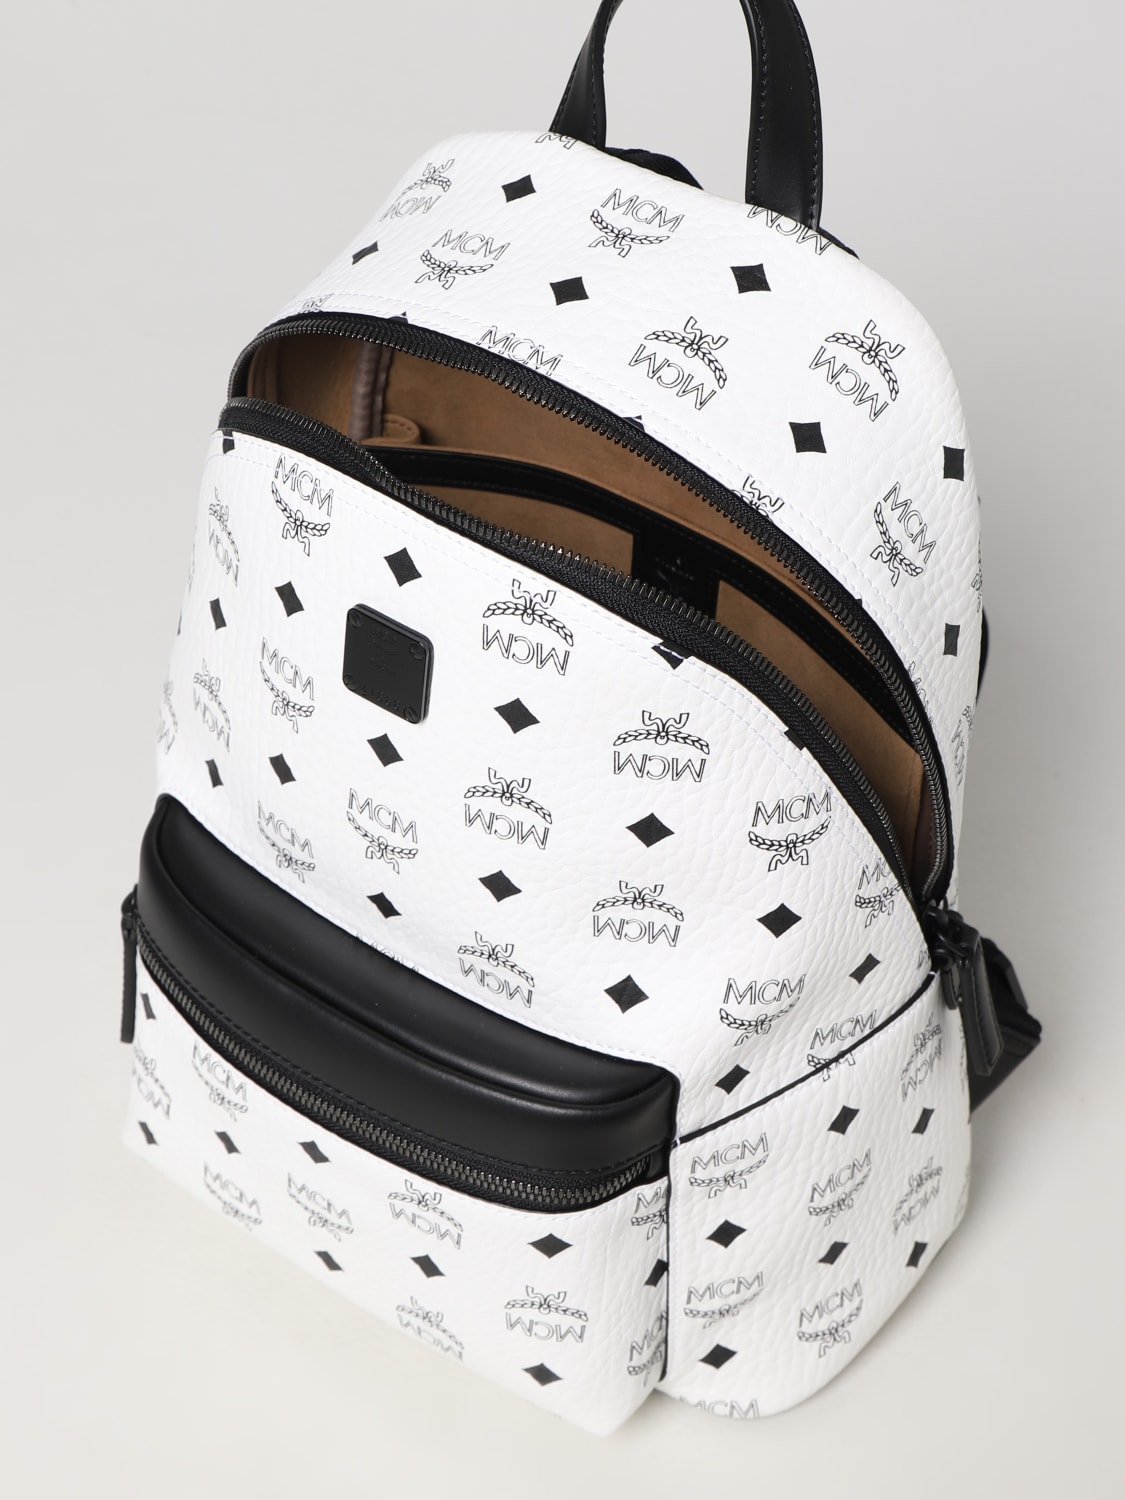 MCM Backpack and bumbags Men MMKBATQ02EG Fabric Gray Black 477,75€